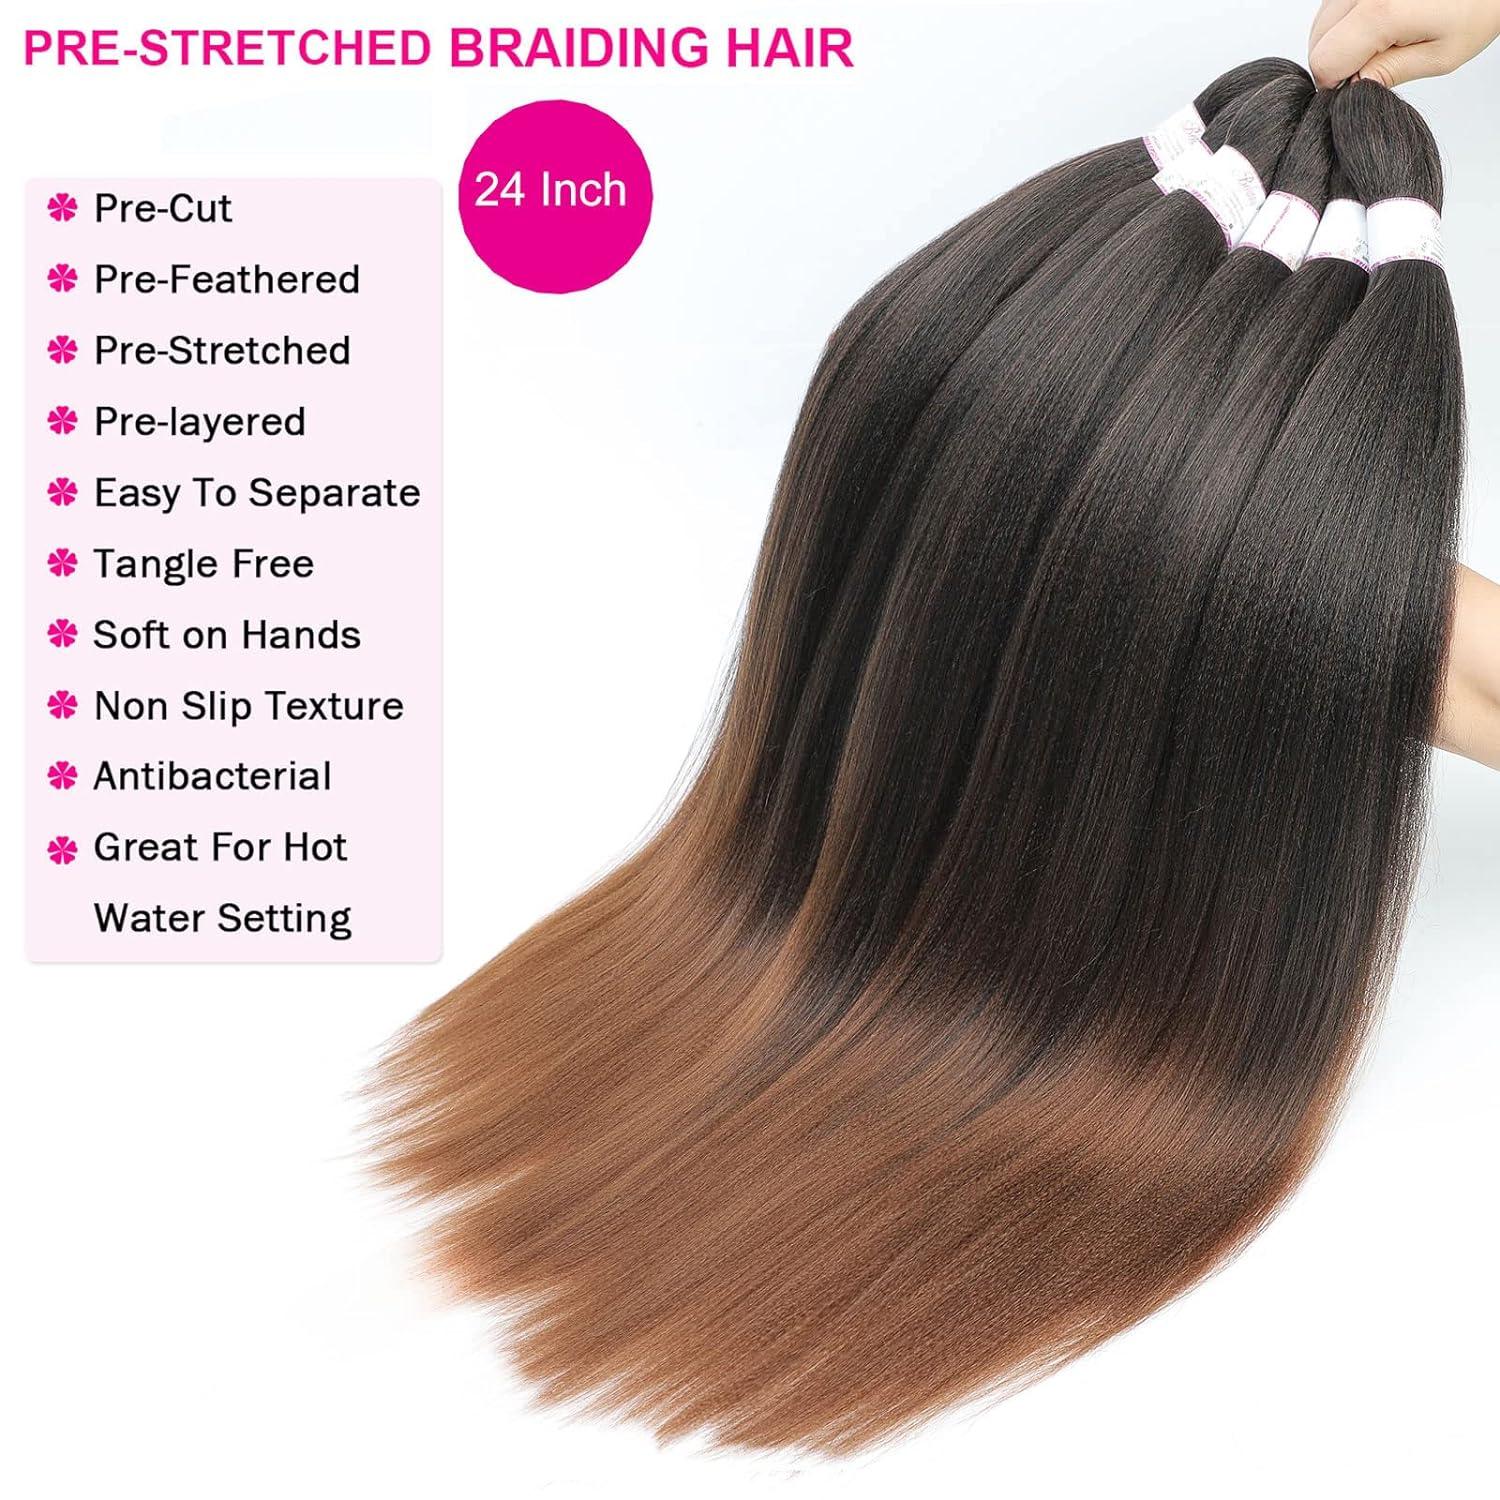 BEFUNNY Braiding Hair Pre Stretched Braiding Hair 24 Inch 8 Packs